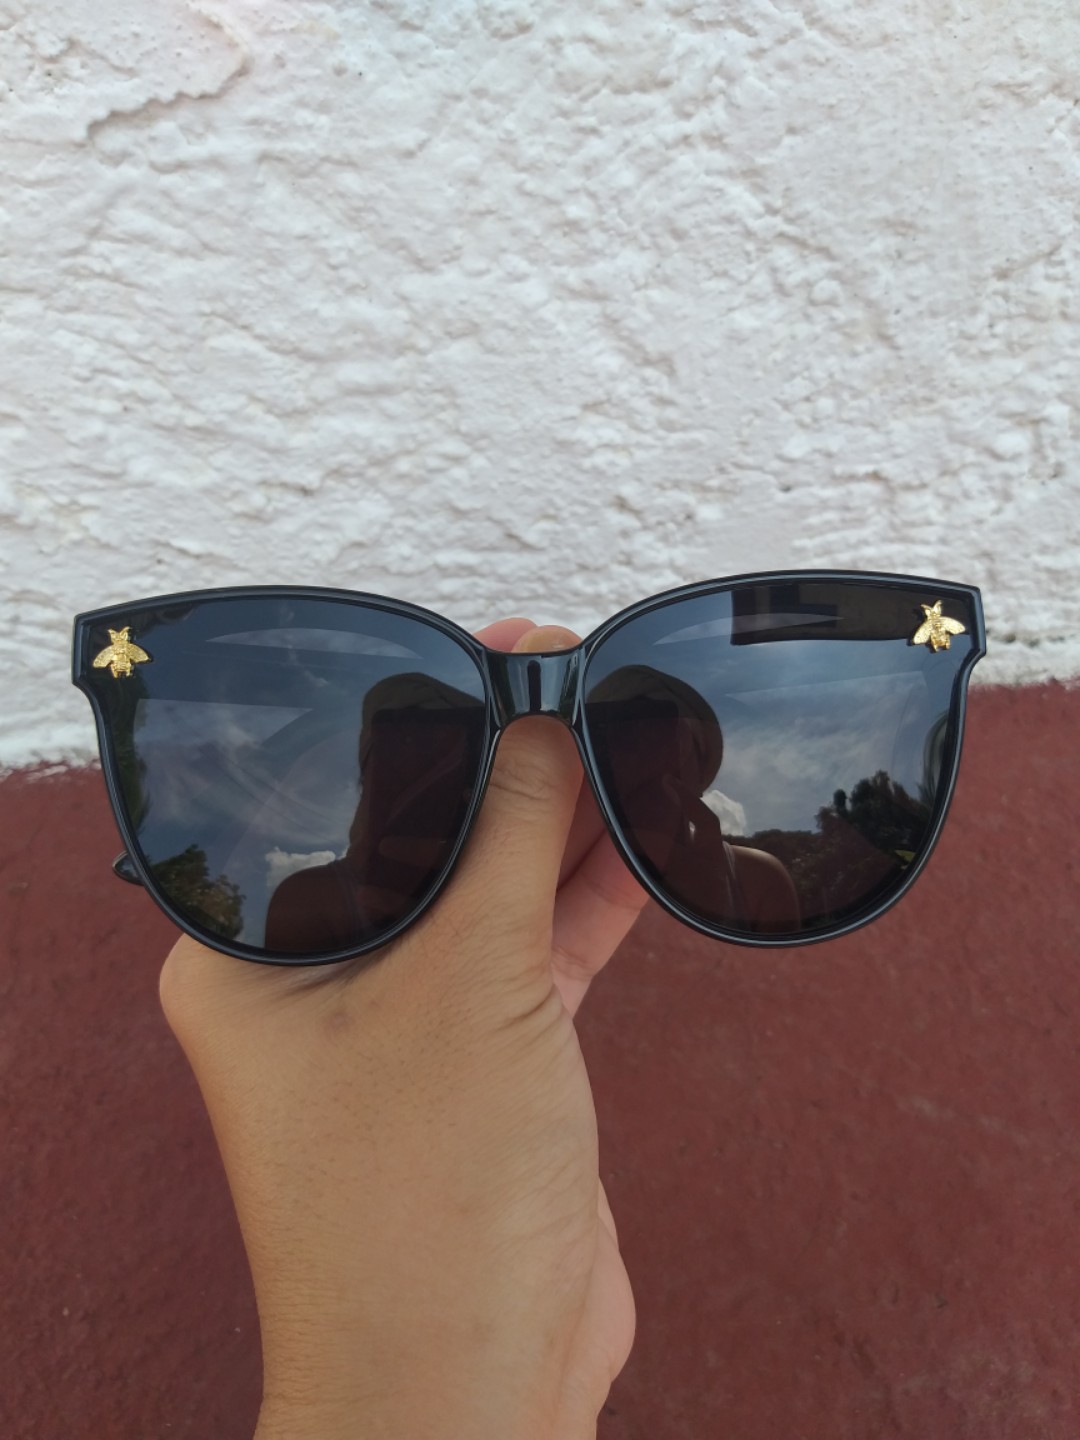 black gucci sunglasses with red stripe